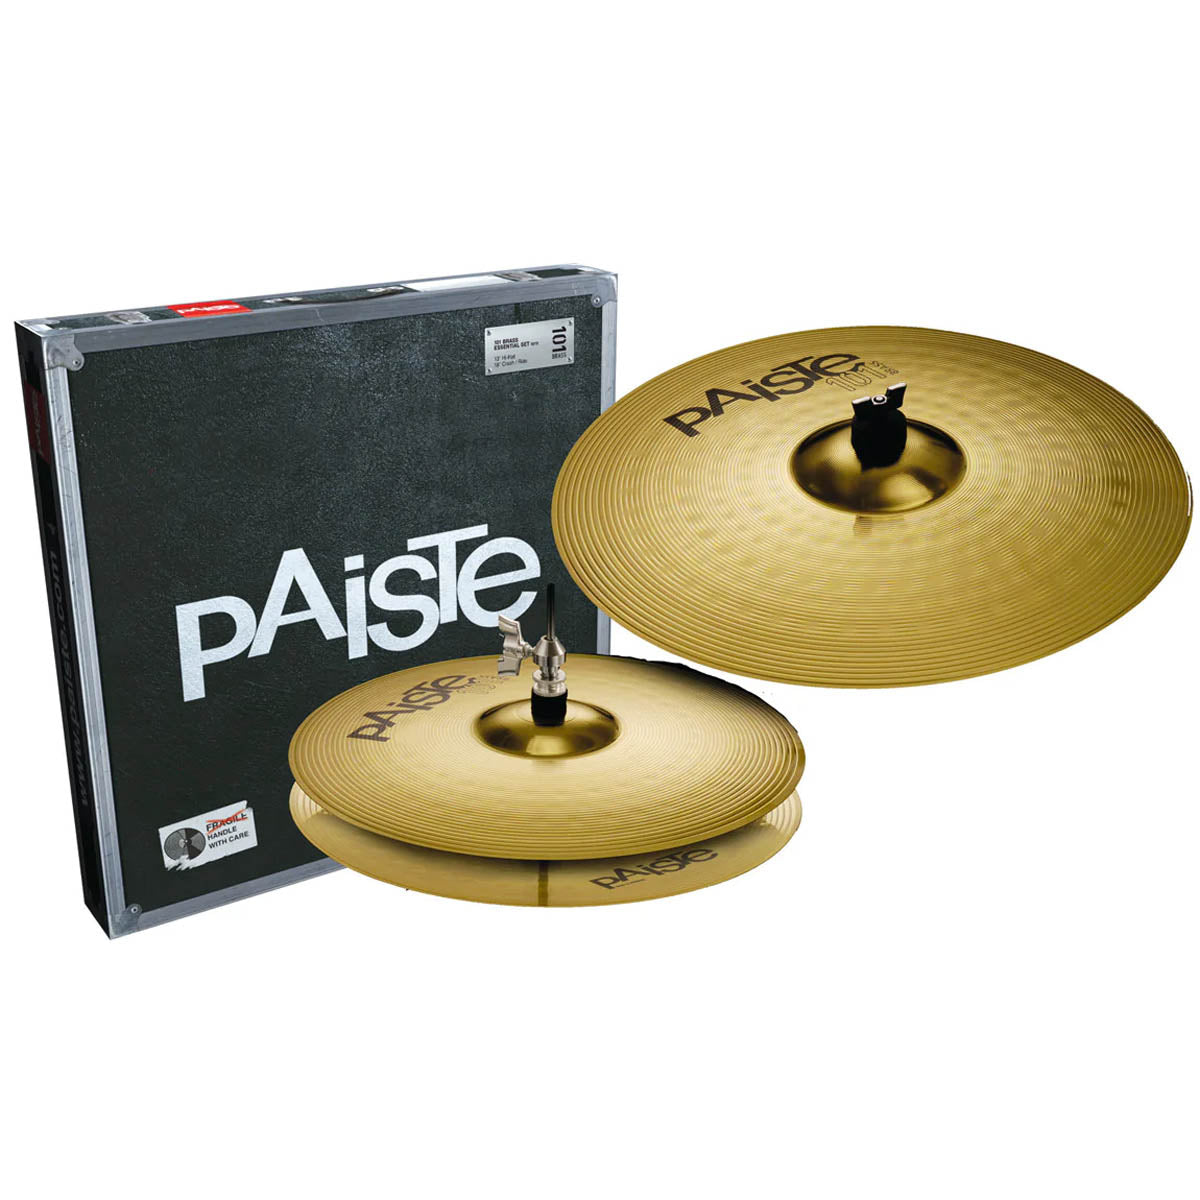 Paiste 101 Brass Essential Set (13" Hats & 18" Crash/Ride)